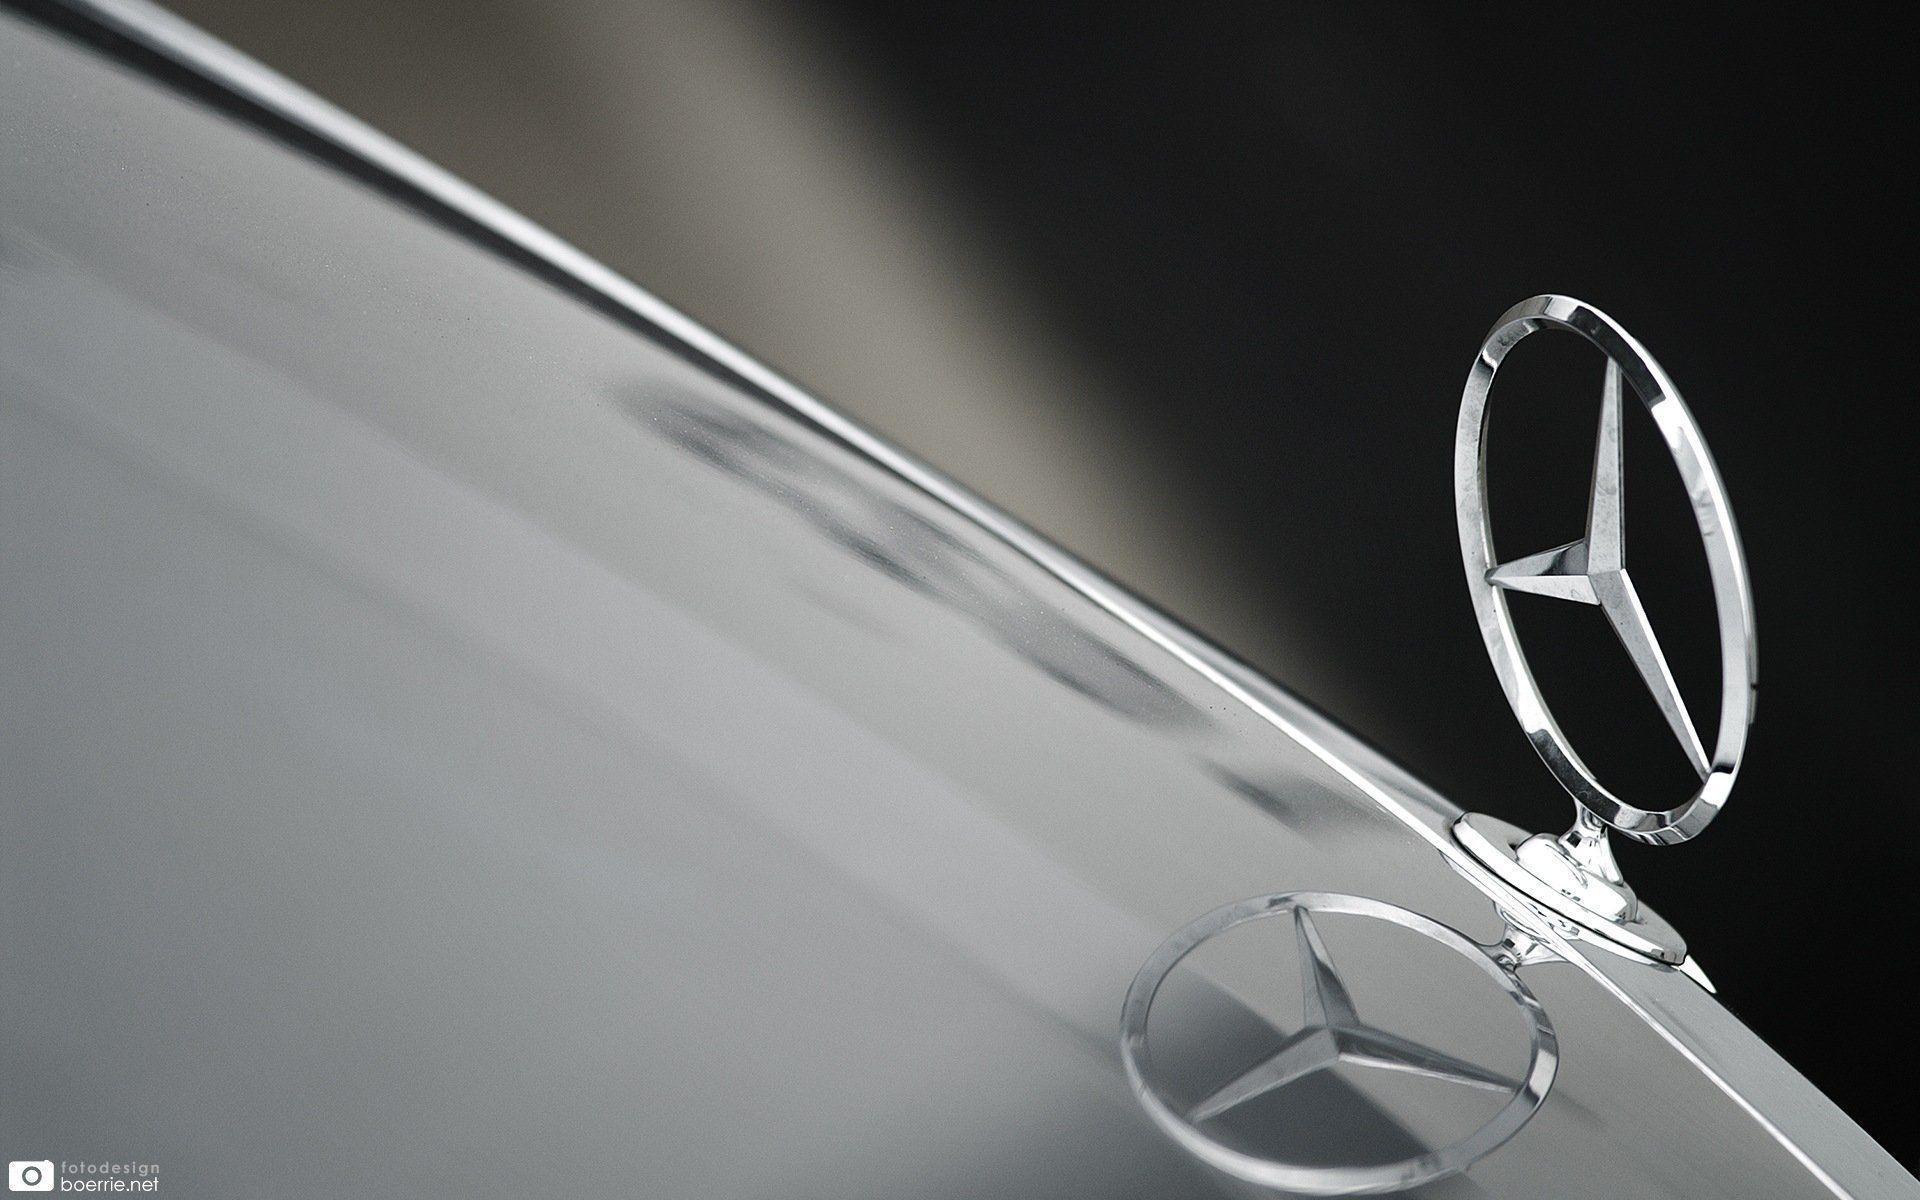 Mercedes Logo Wallpaper